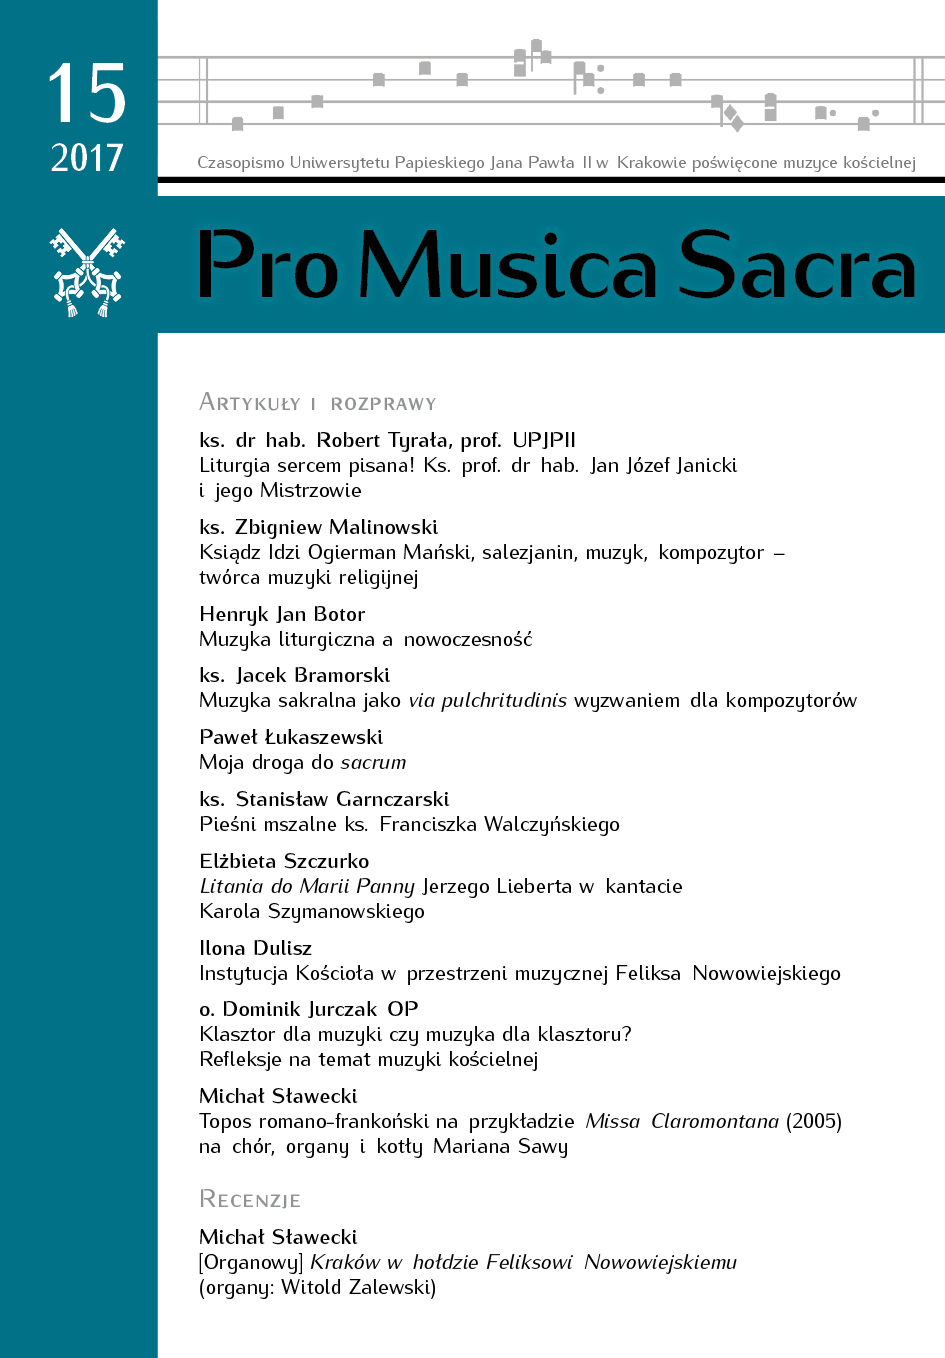 Topos Romano Frankish, on the example of Marian Sawa’s Missa Claromontana (2005) for choir, organ and timpani Cover Image